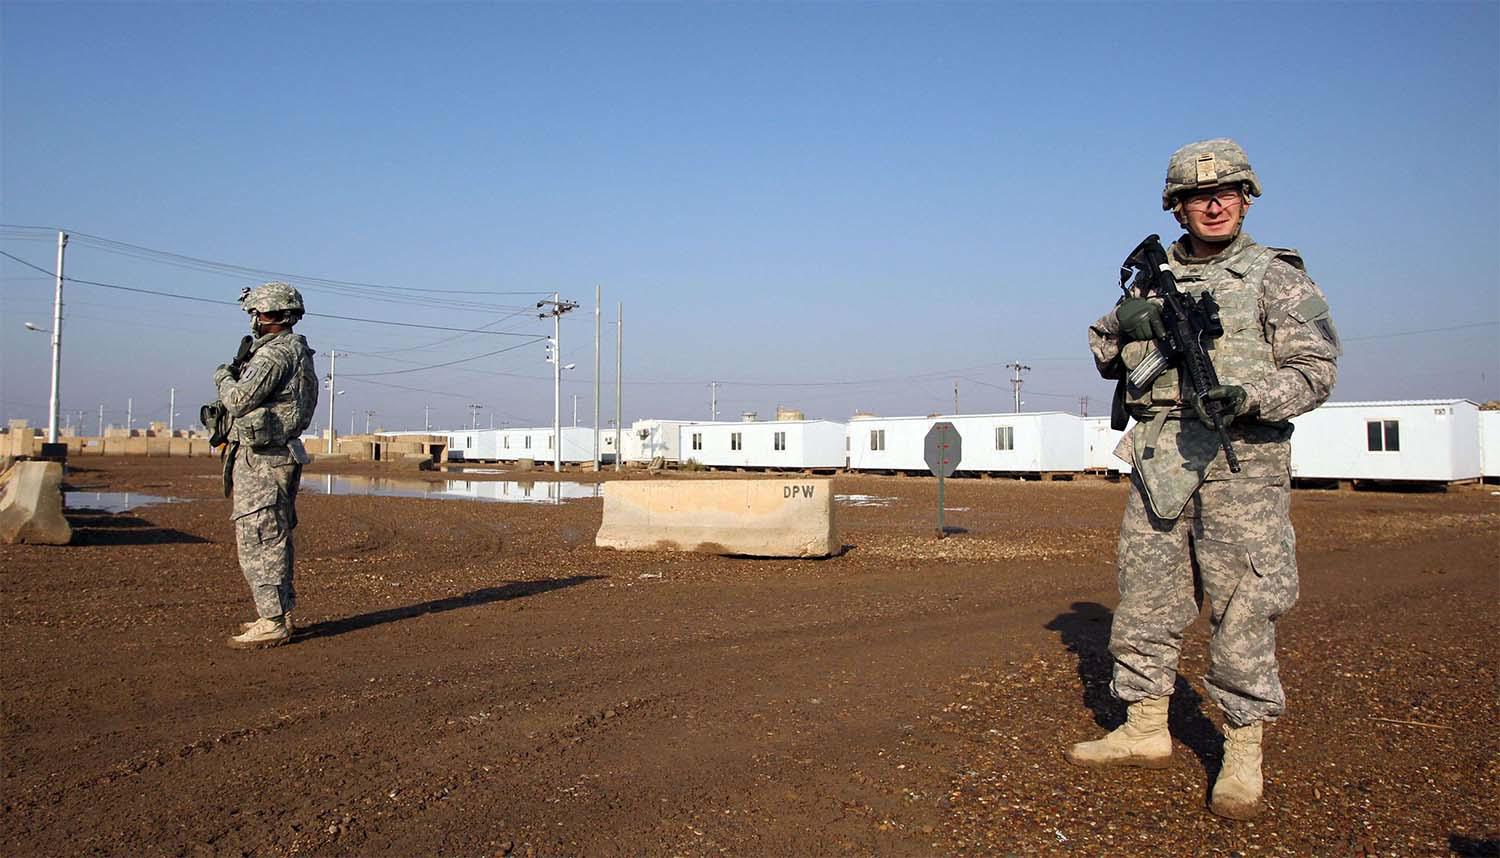 US soldiers walk around at the Taji base complex 